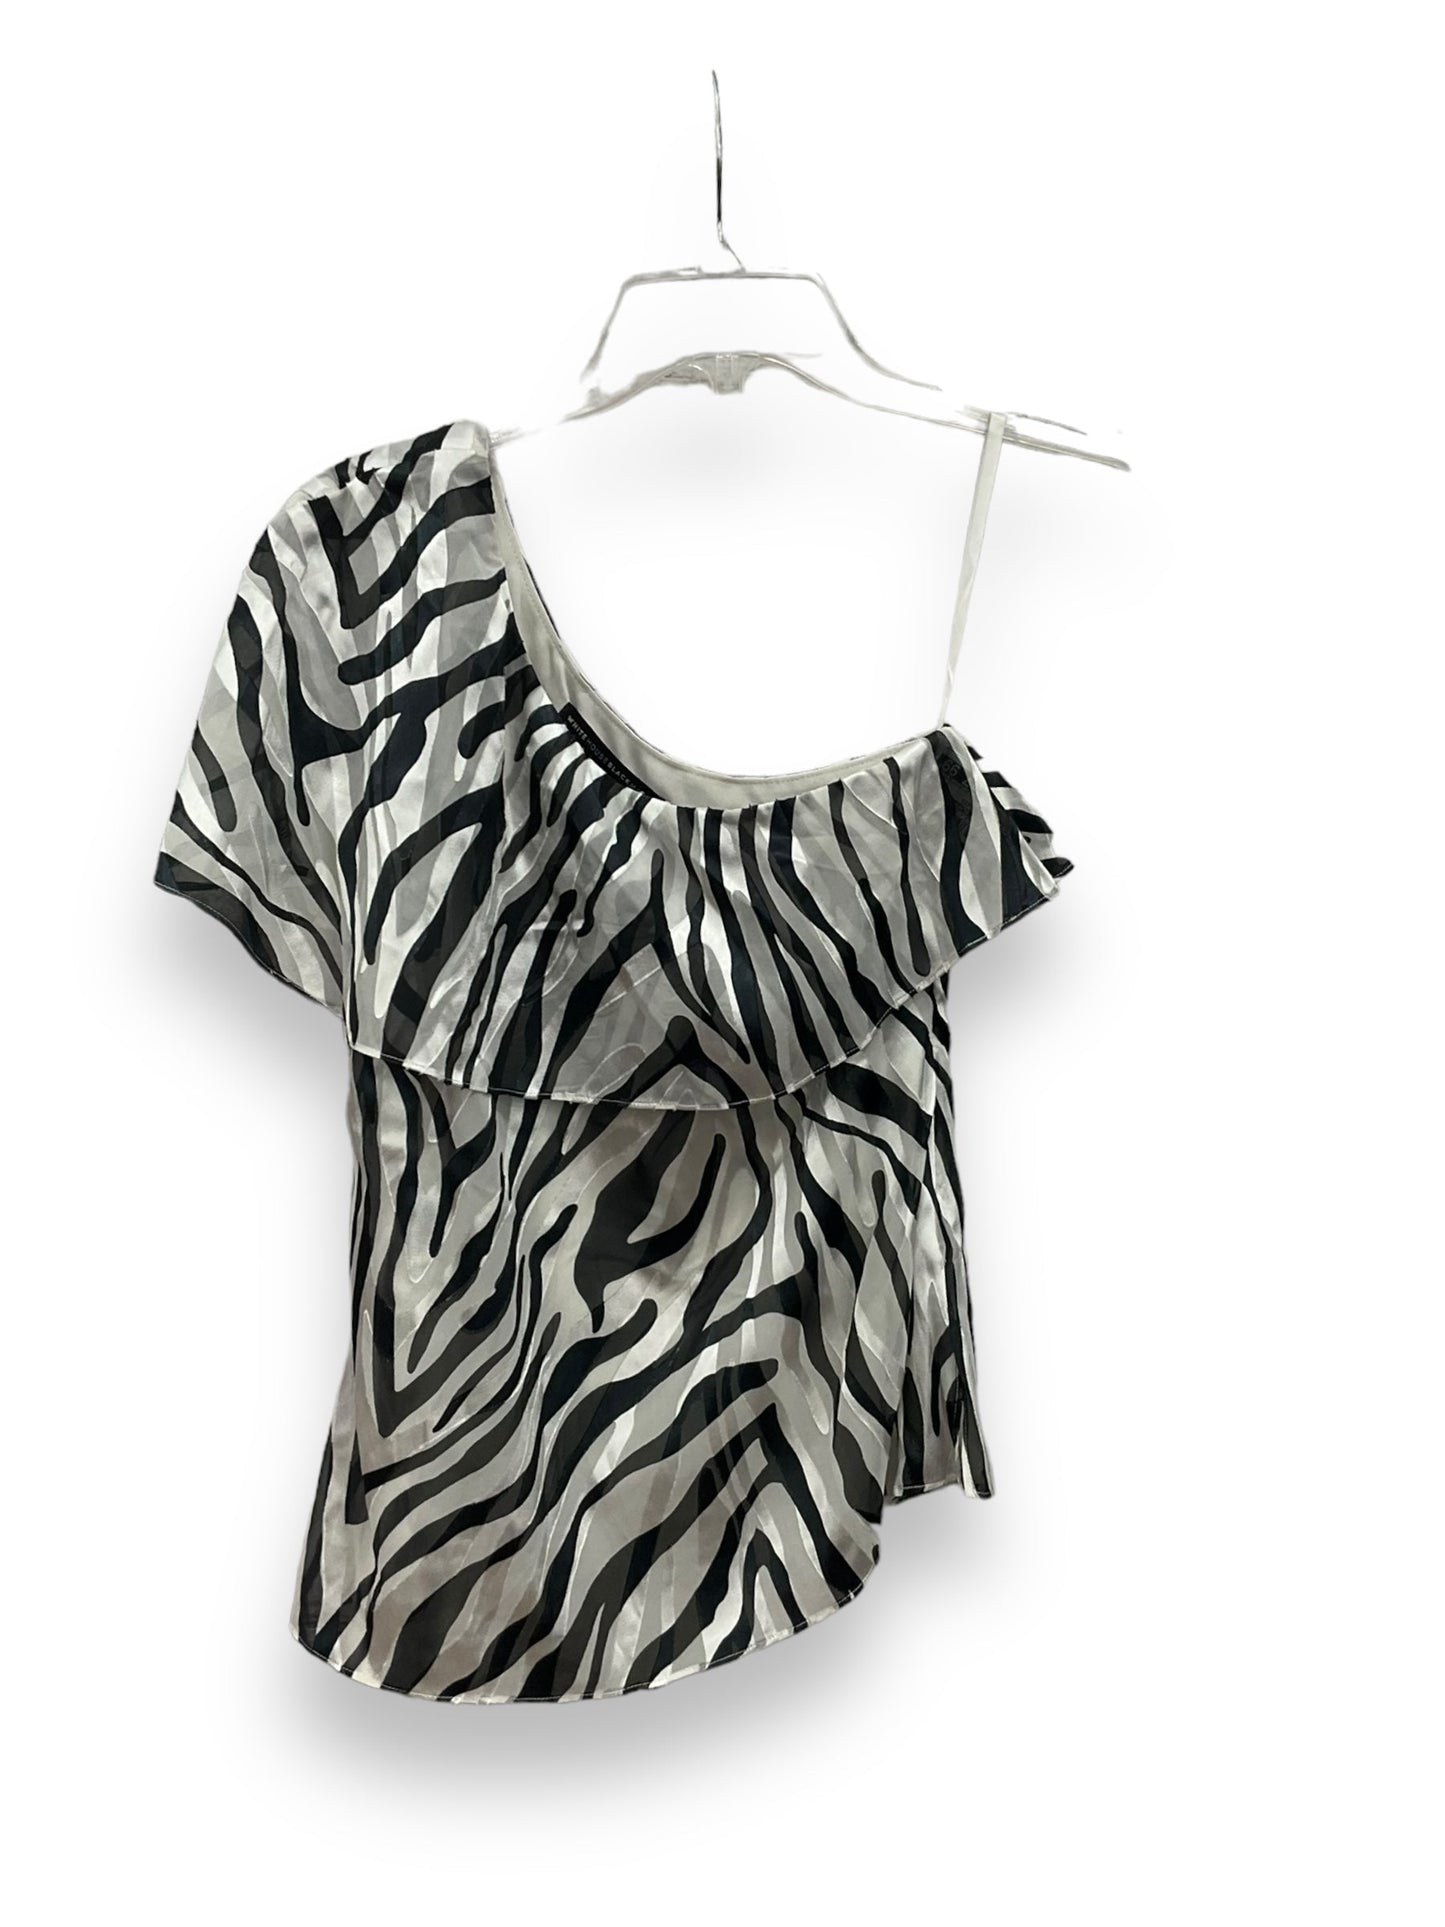 Zebra Print Blouse Sleeveless White House Black Market, Size Xs